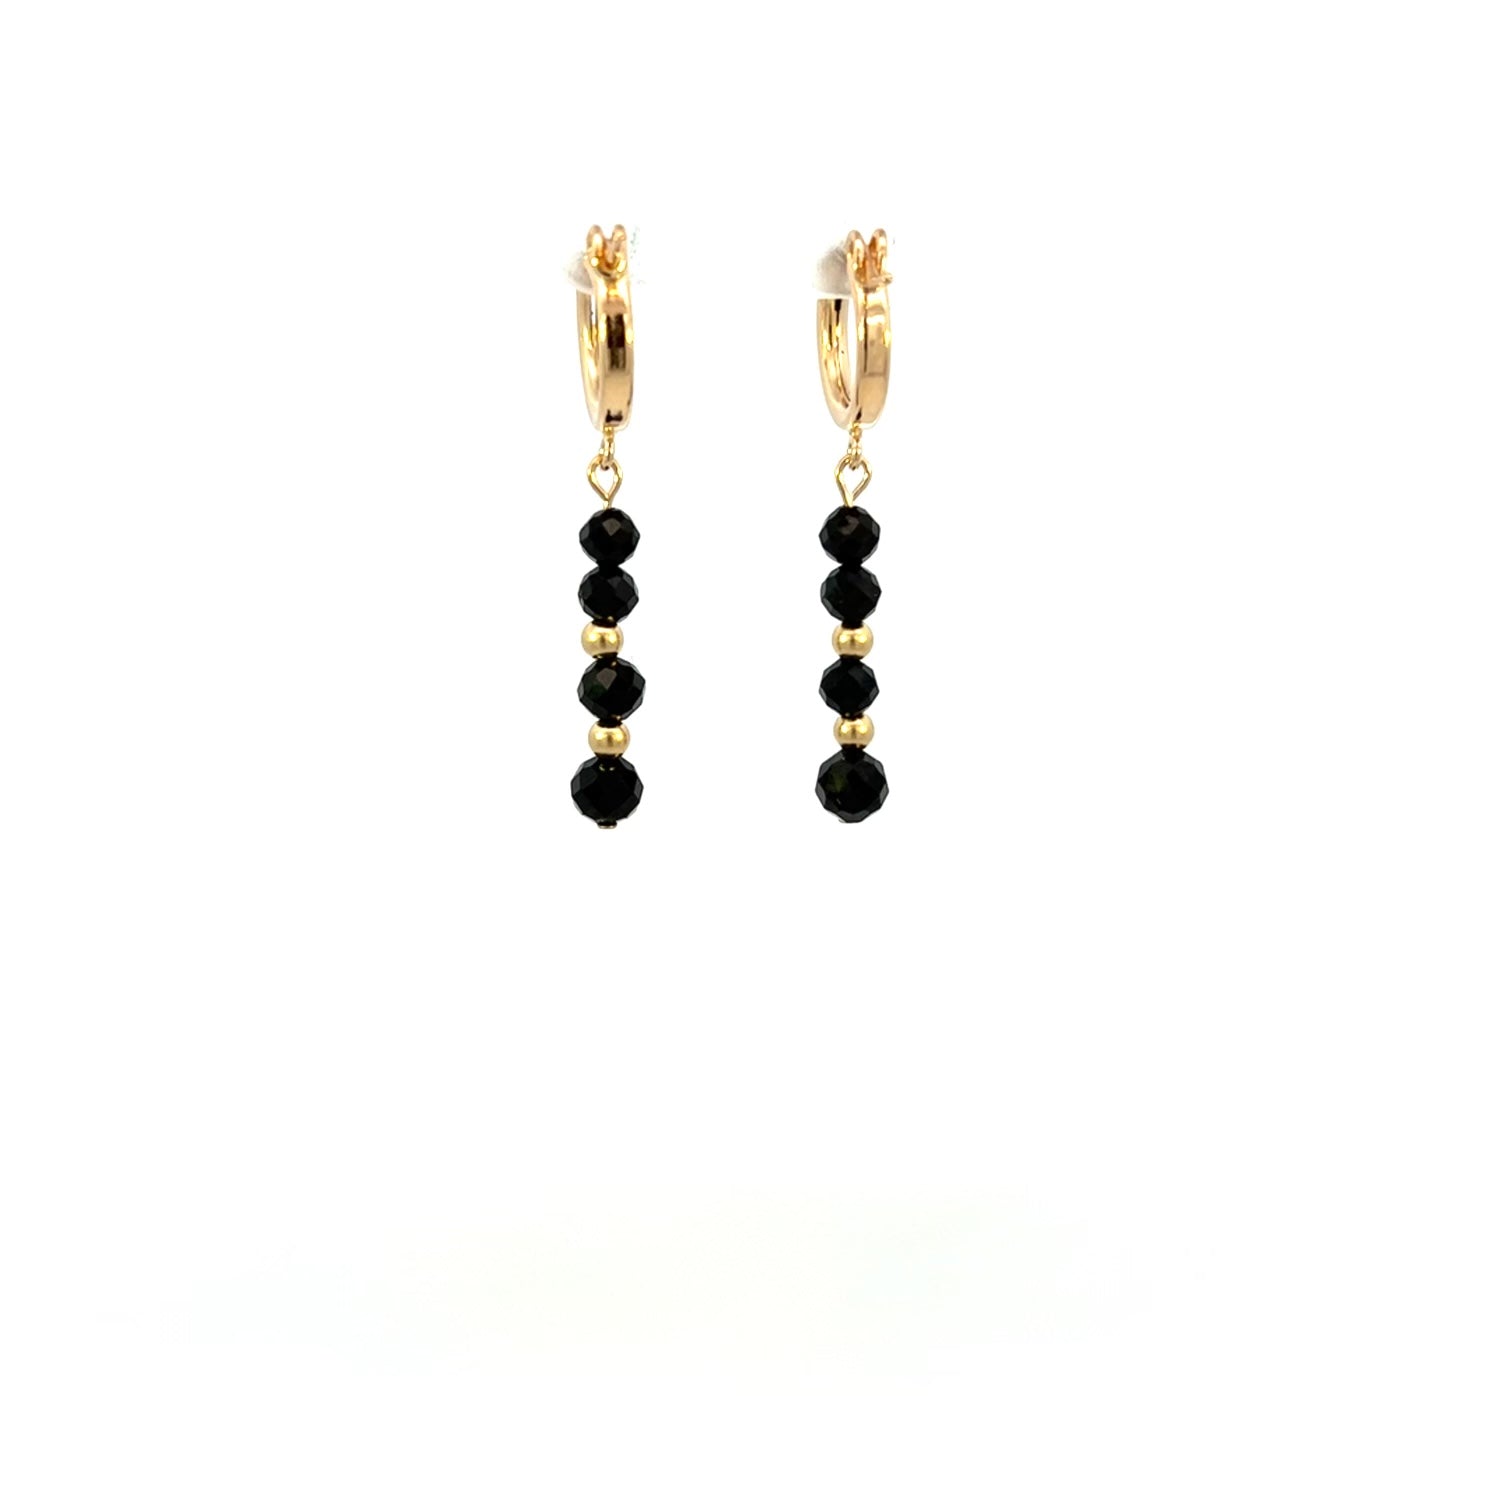 Buy Silver-Toned & Black Earrings for Women by Sohi Online | Ajio.com